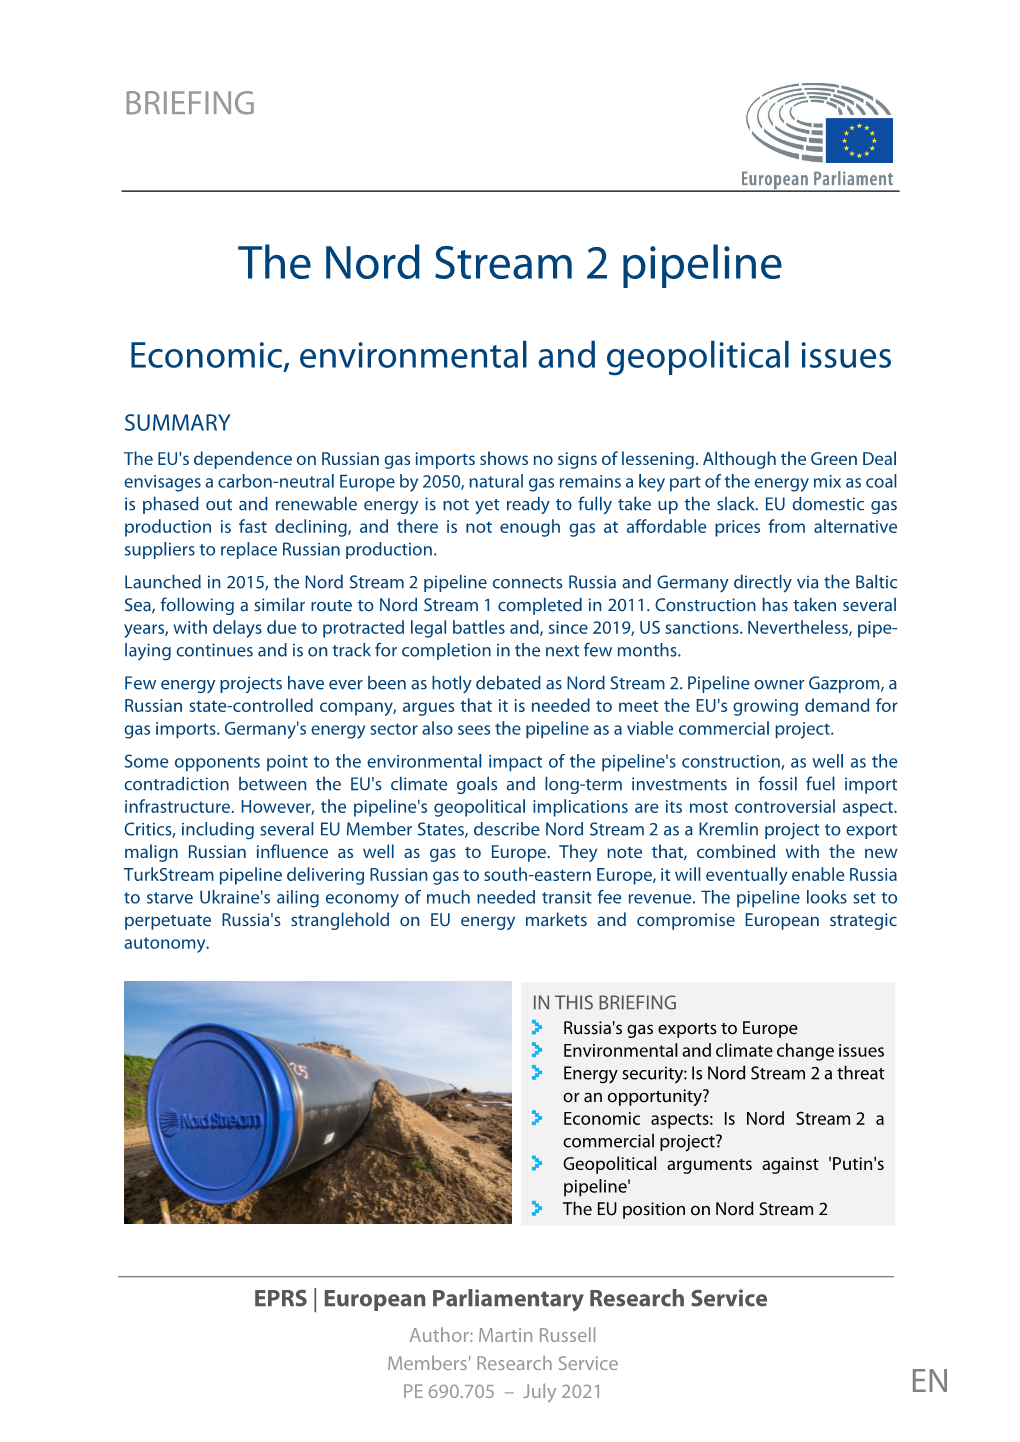 The Nord Stream 2 Pipeline